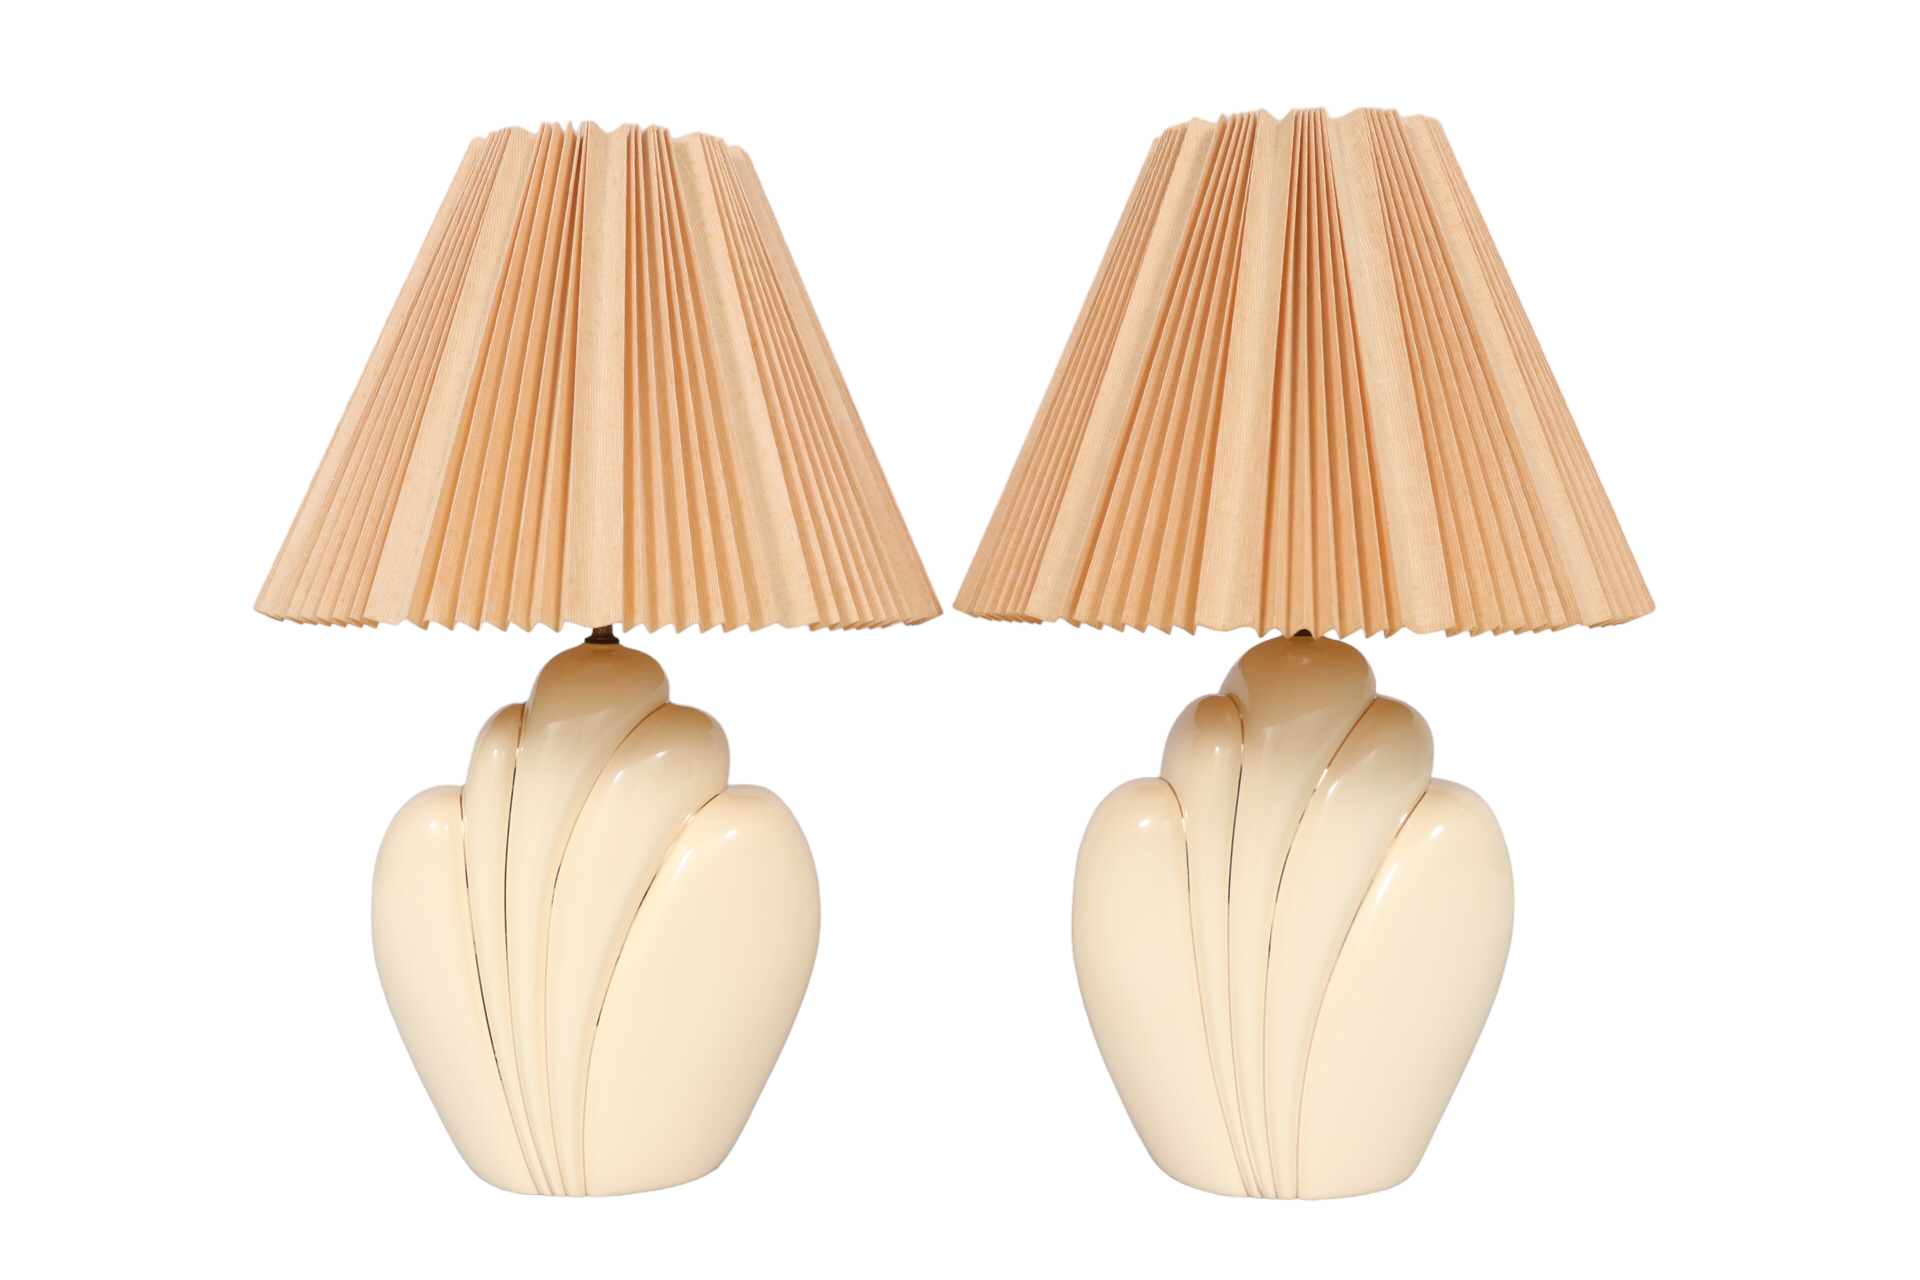 Sculptural Ceramic Table Lamps - a Pair